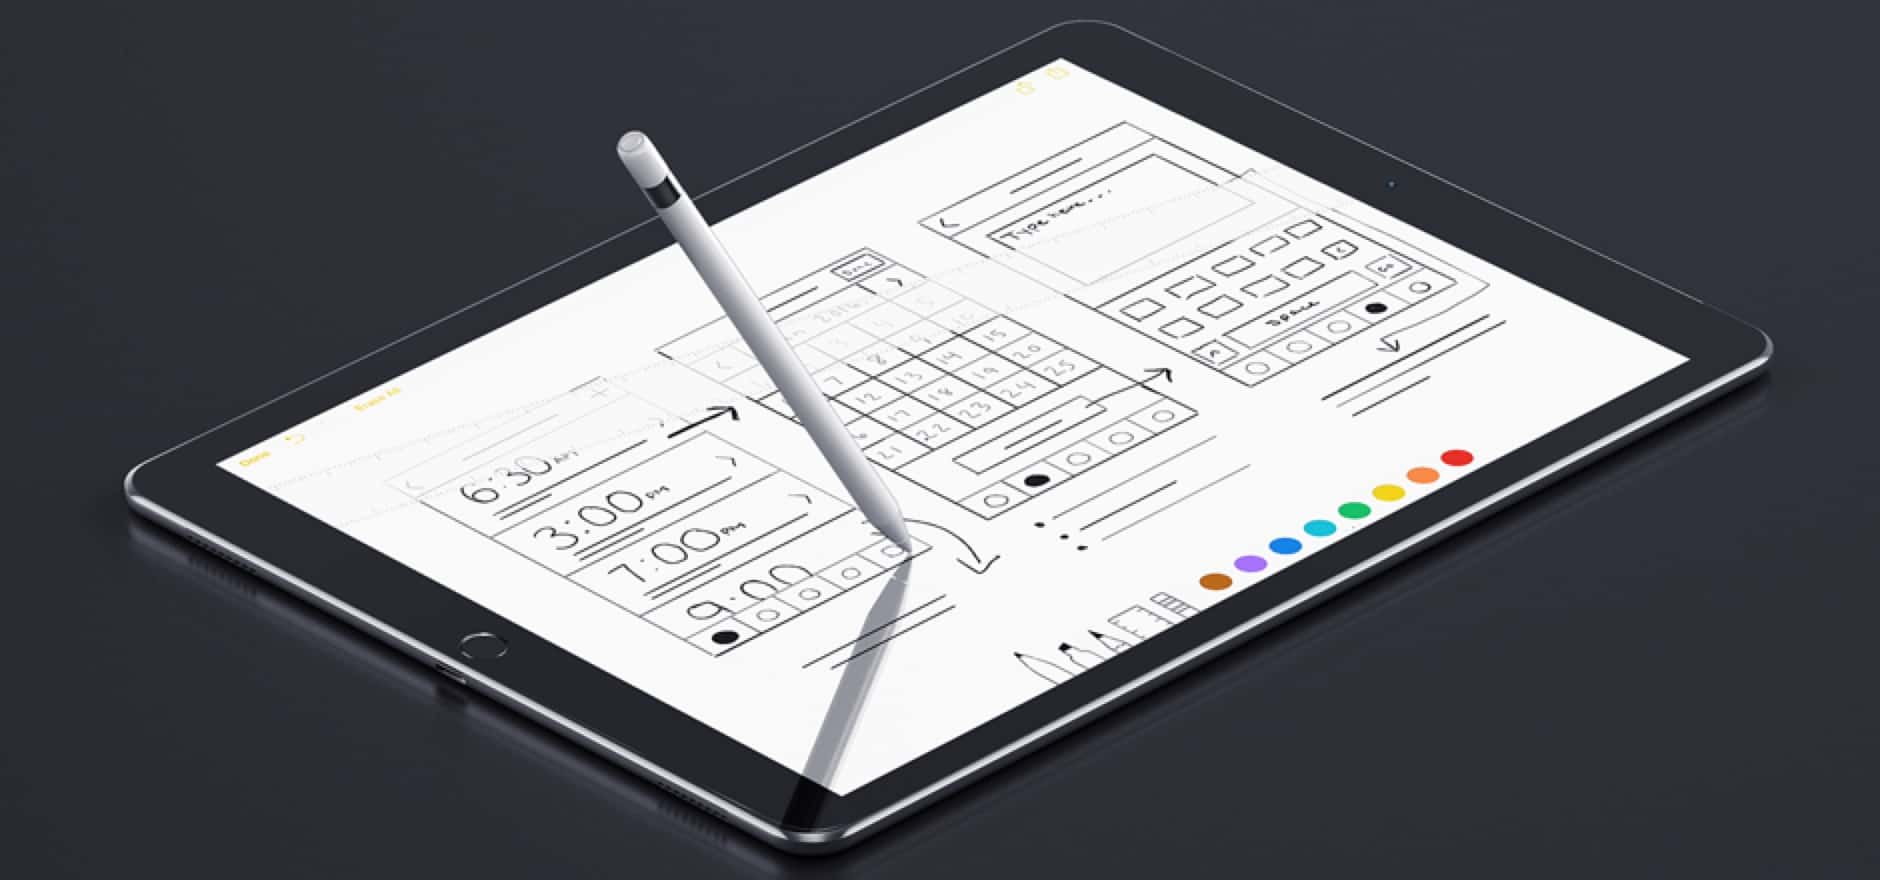 A UX Designer’s Review of iPad Pro